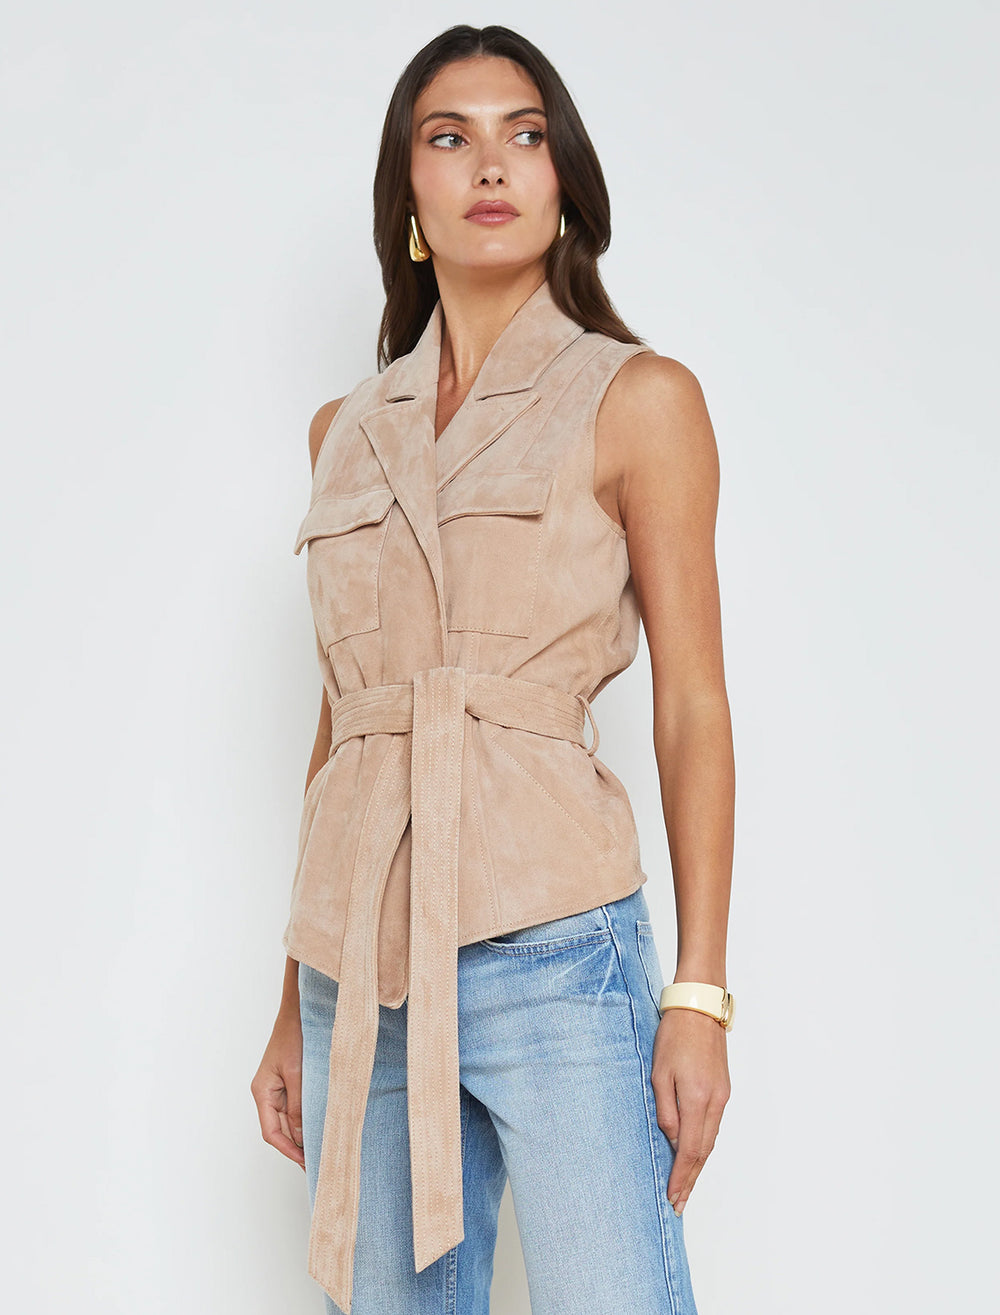 Model wearing L'agence's arbor wrap belted vest in cashew.